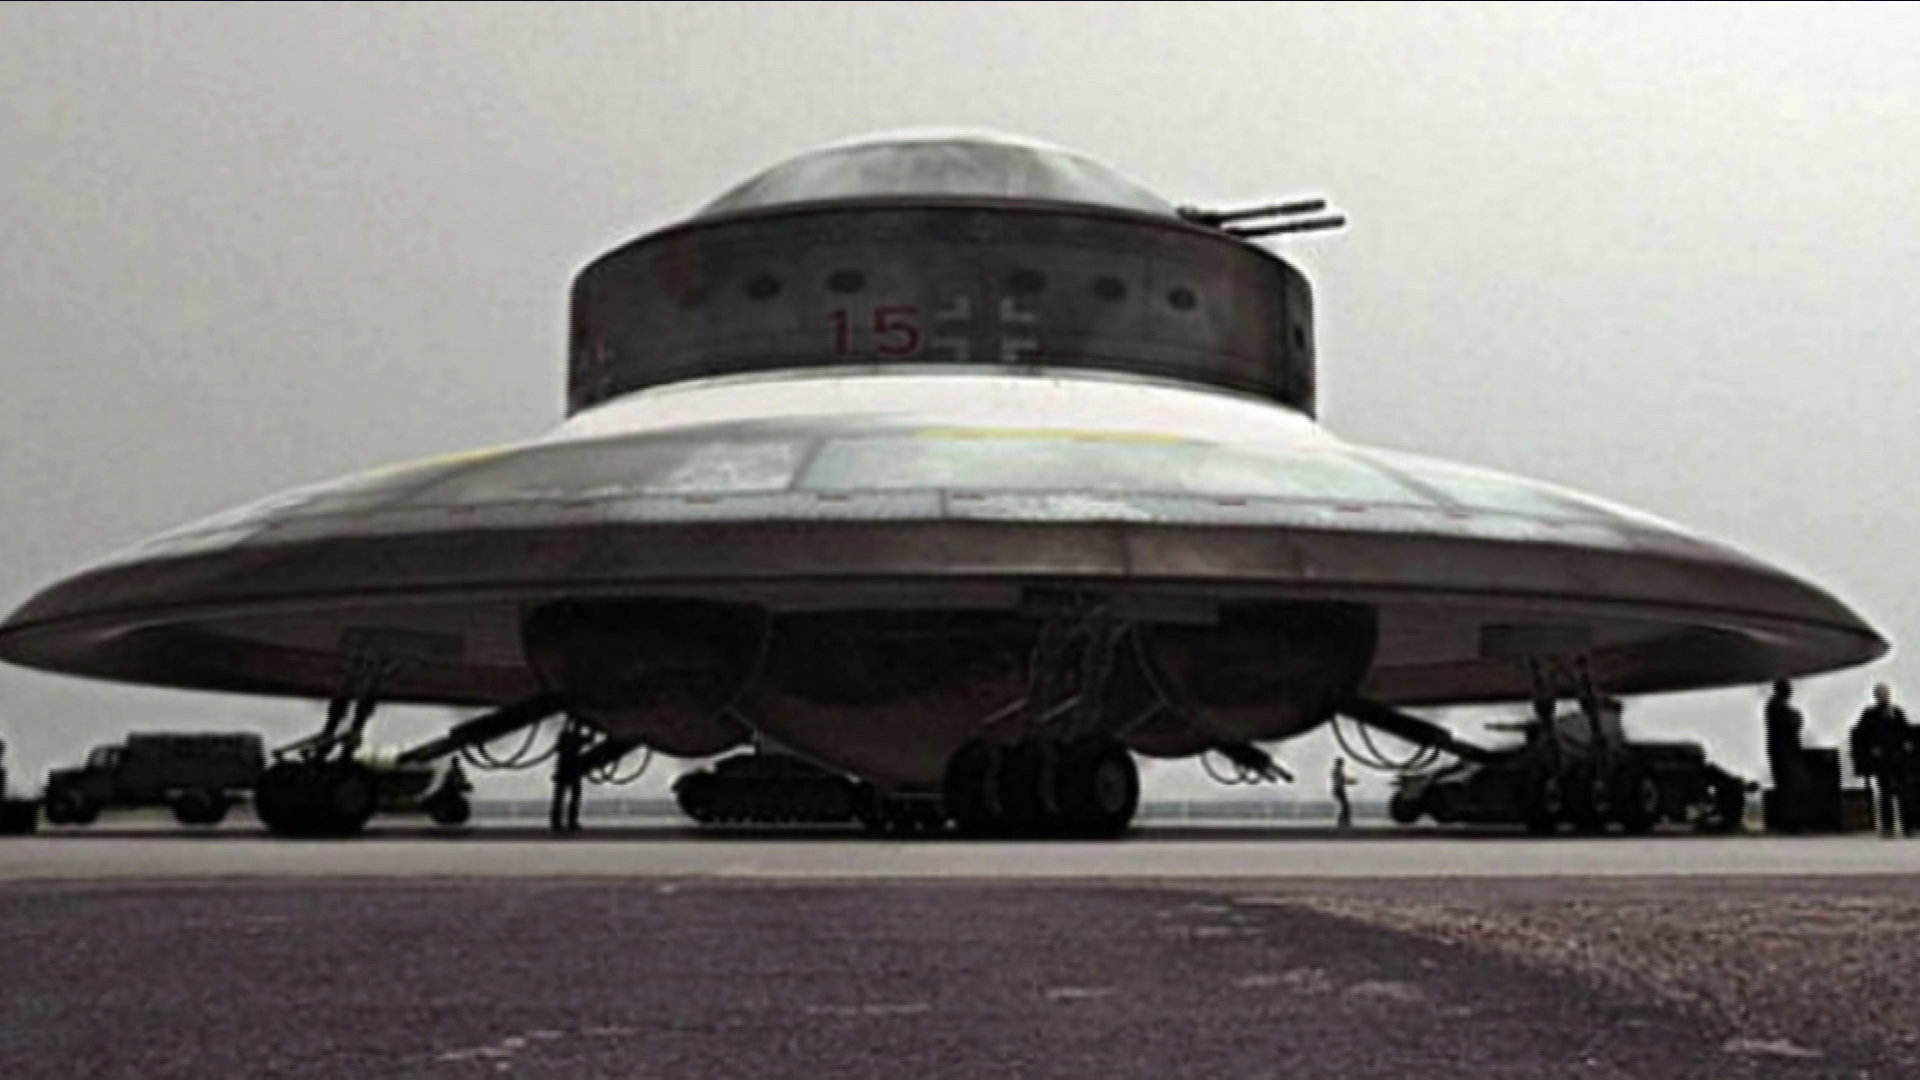 Nazi Alien Contact and the Haunebu UFOs: Fact or Fiction?